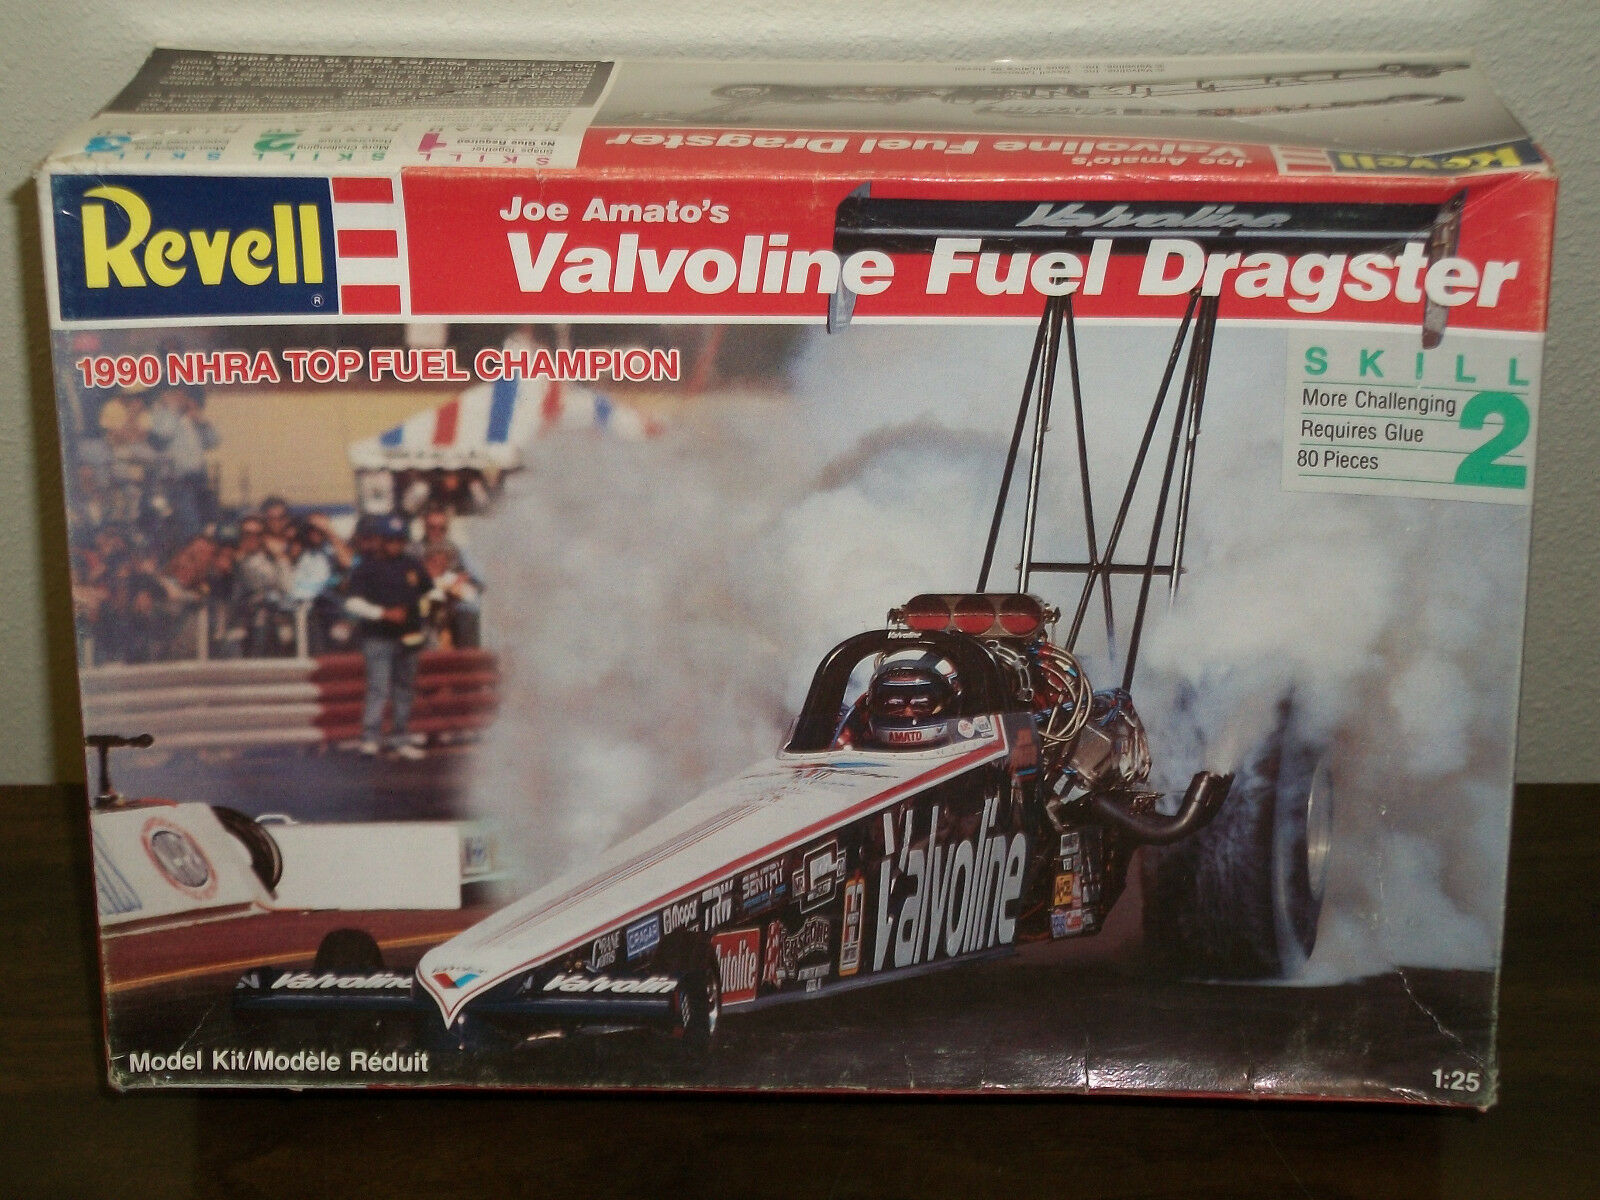 Revell 1/25 Scale Joe Amato's Valvoline Fuel Dragster